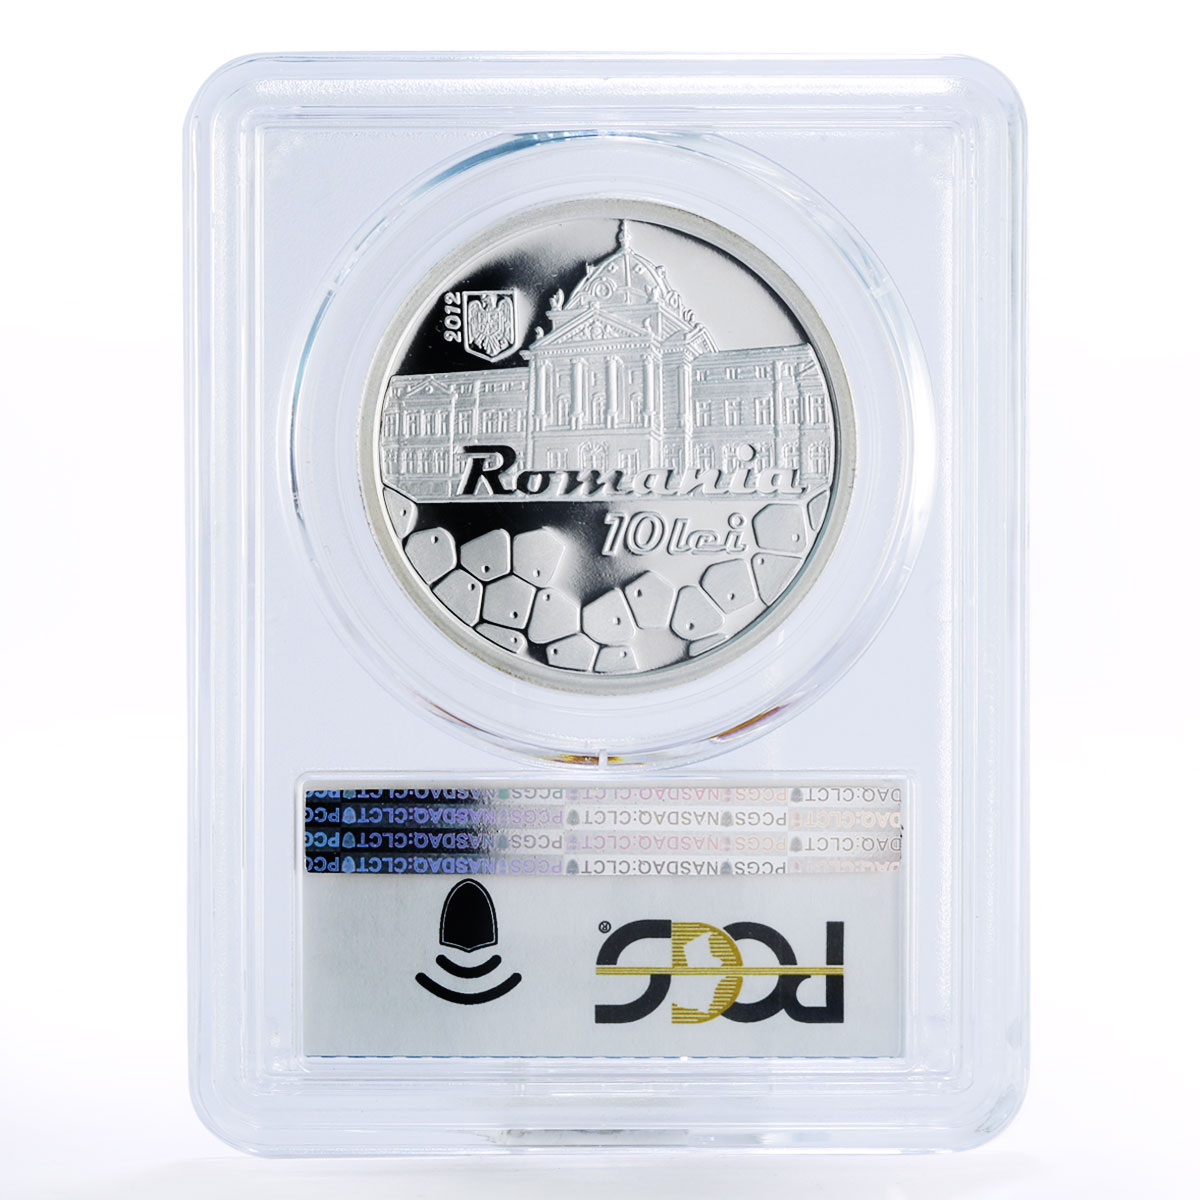 Romania 10 lei Centennial of George Emil Palade PR70 PCGS silver coin 2012